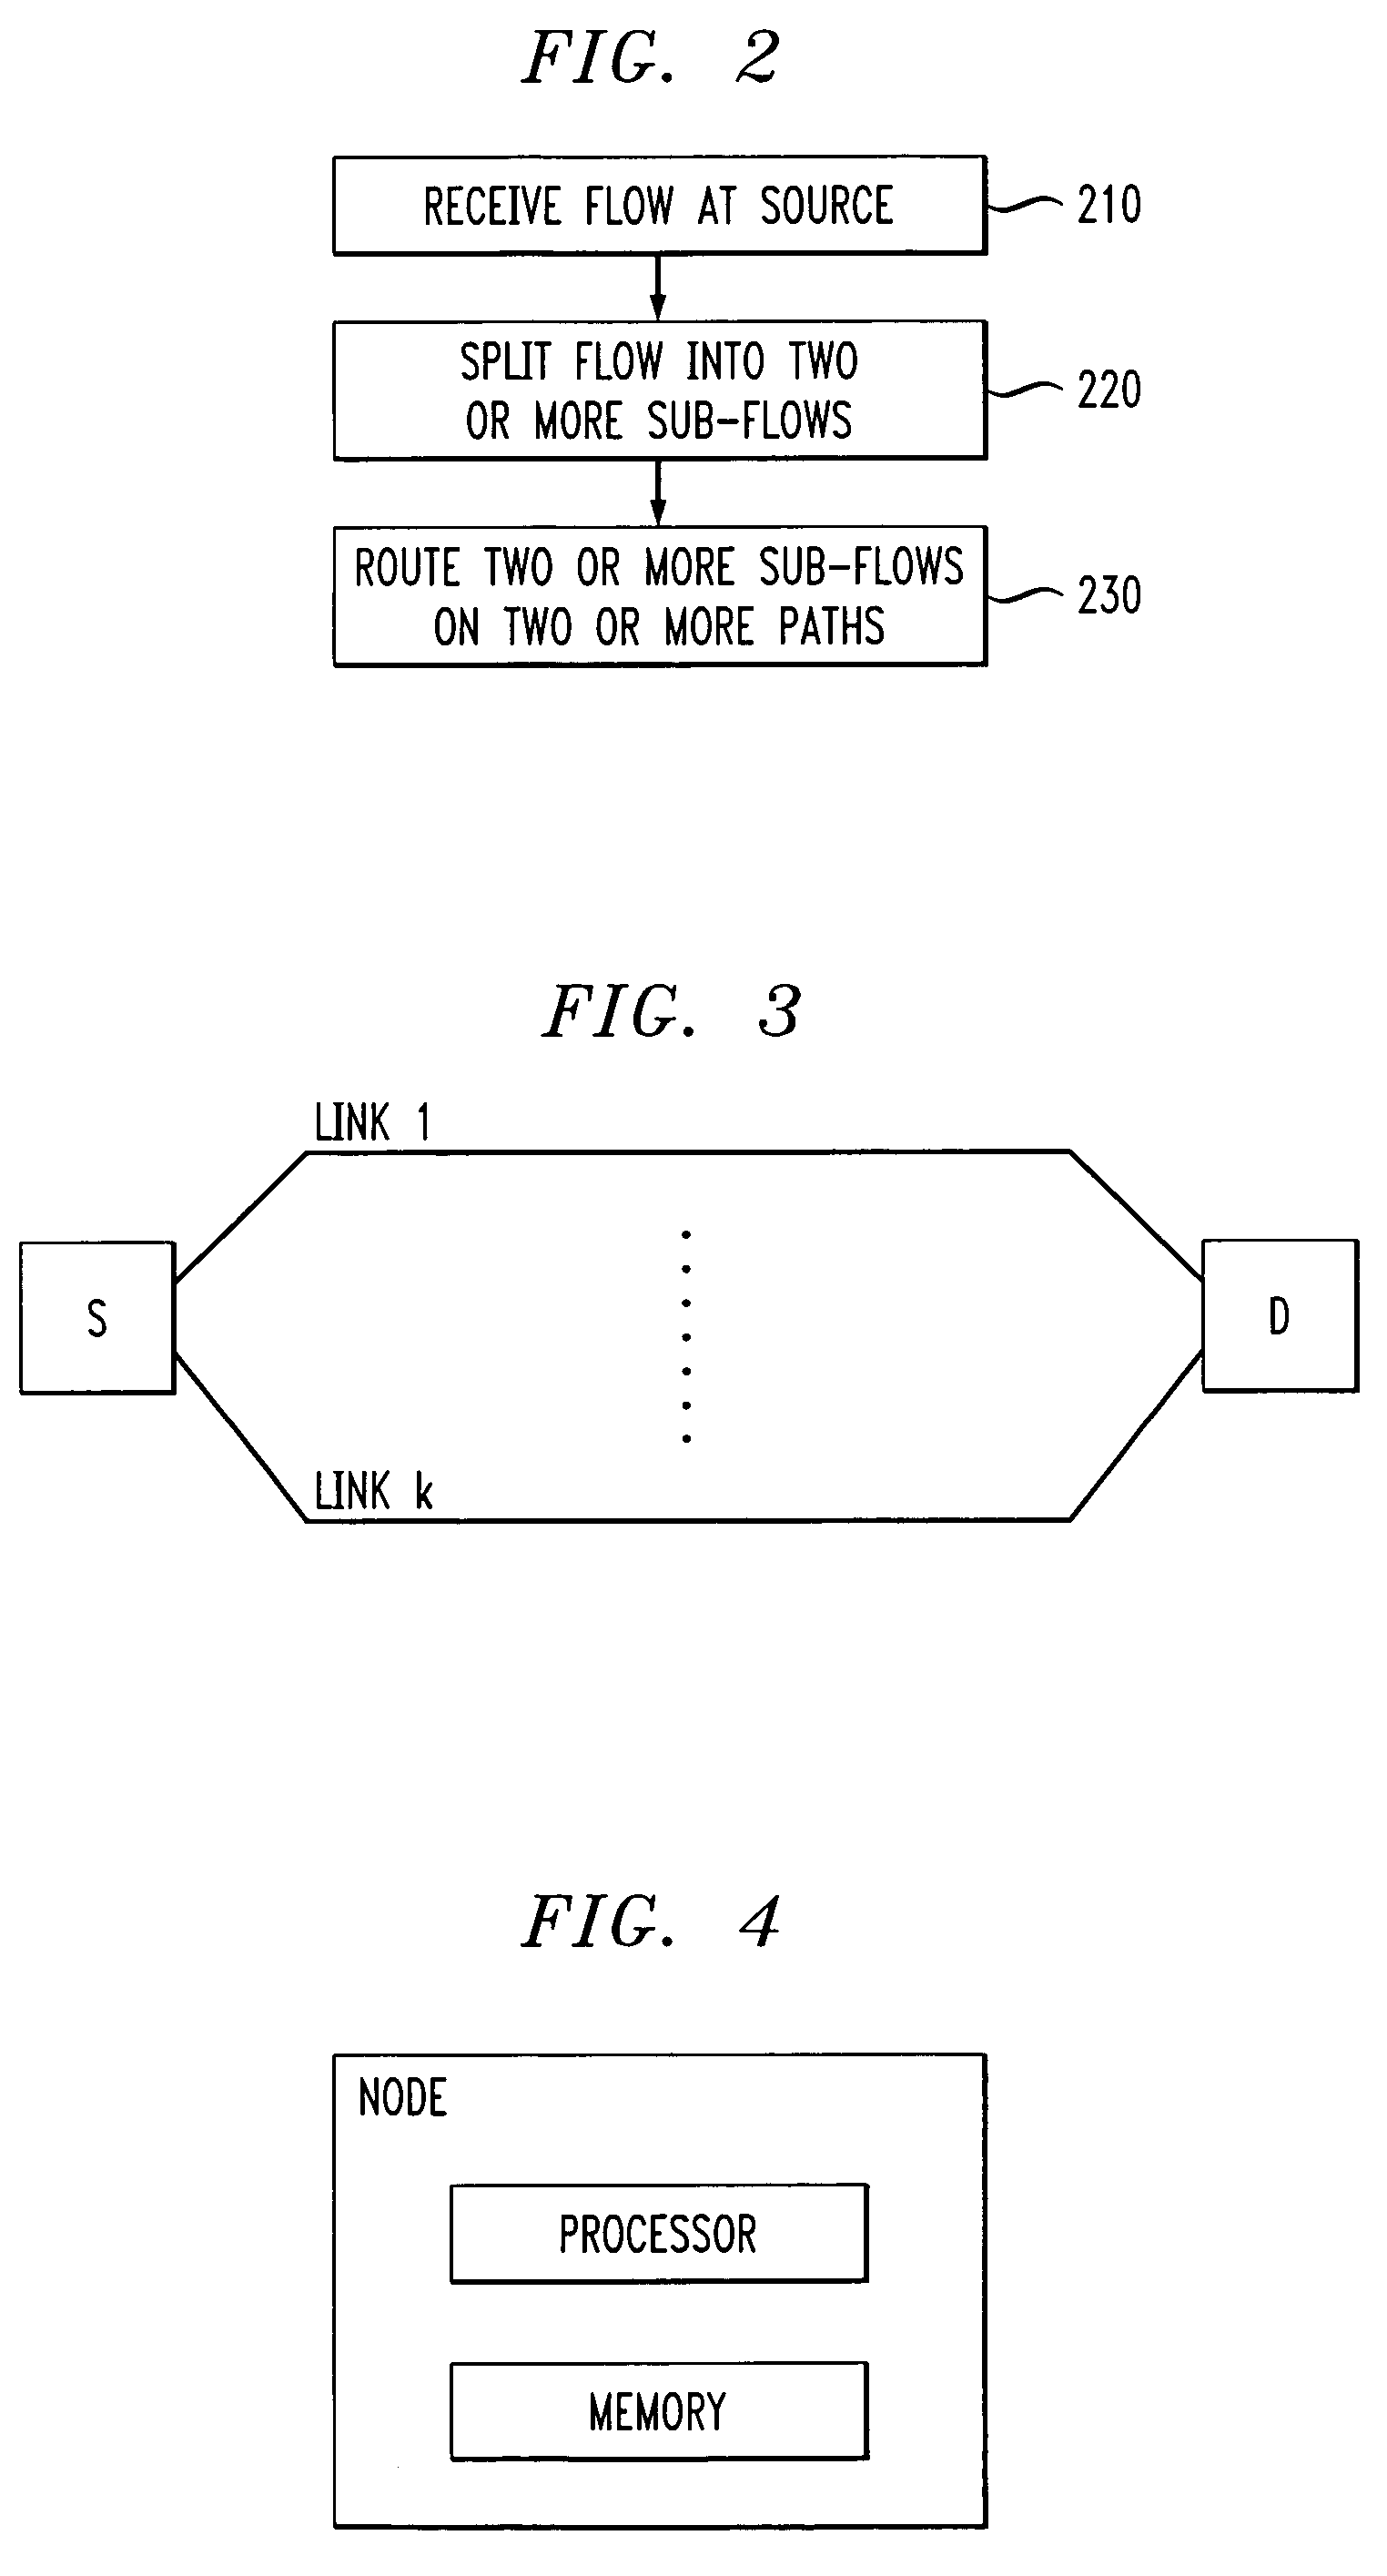 Multi-path routing using intra-flow splitting